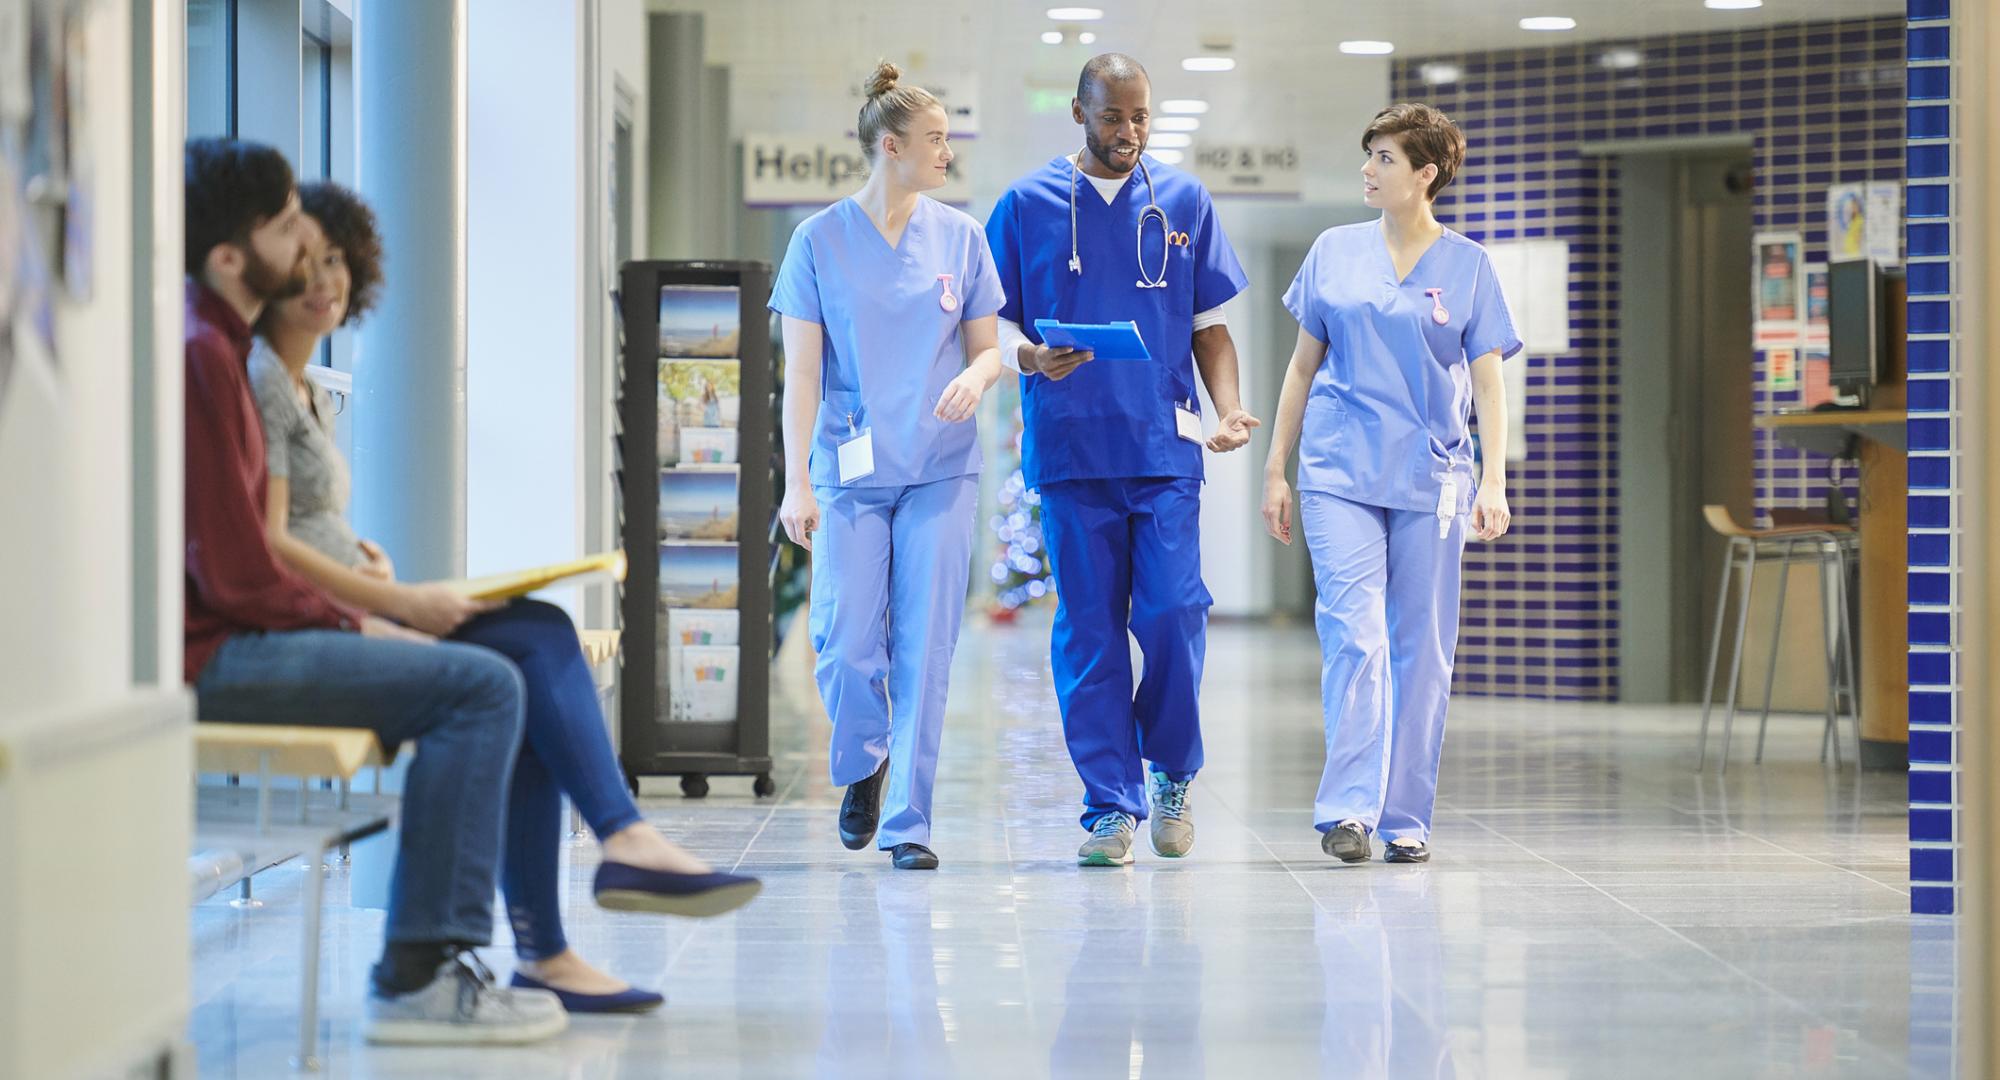 Nurses having a conversation walking through hospital corridors